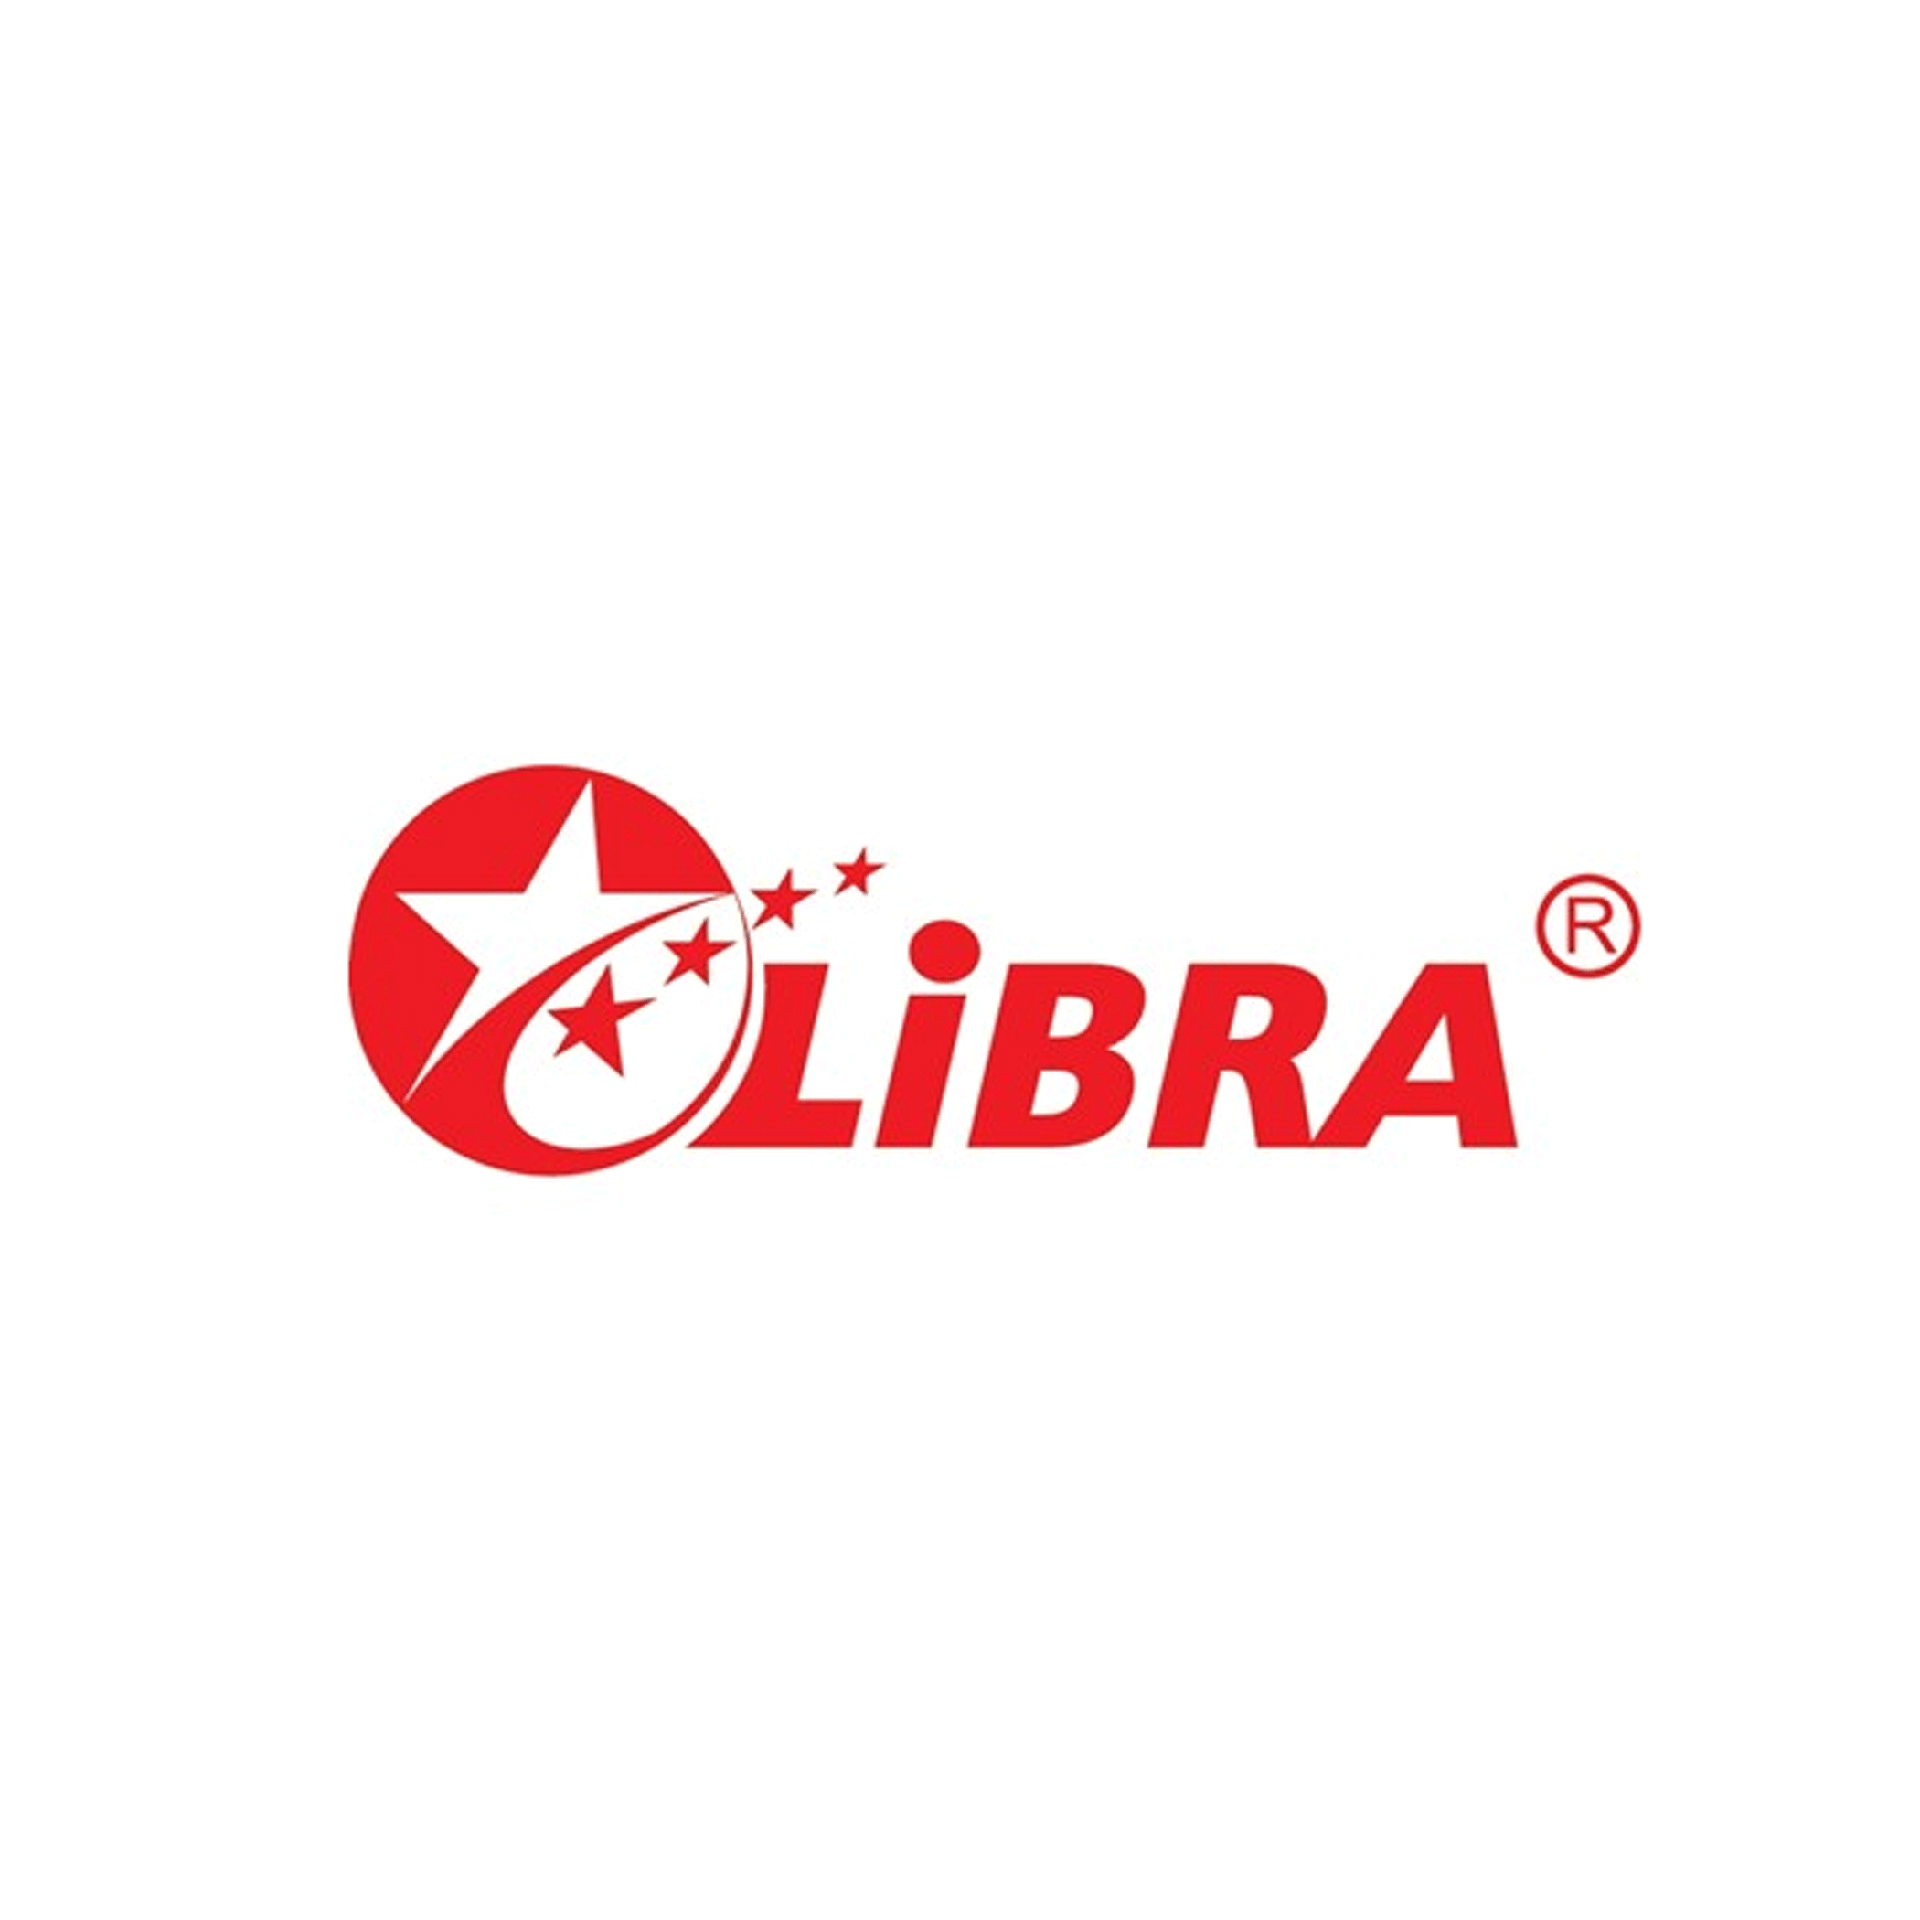 Product Brand: Libra